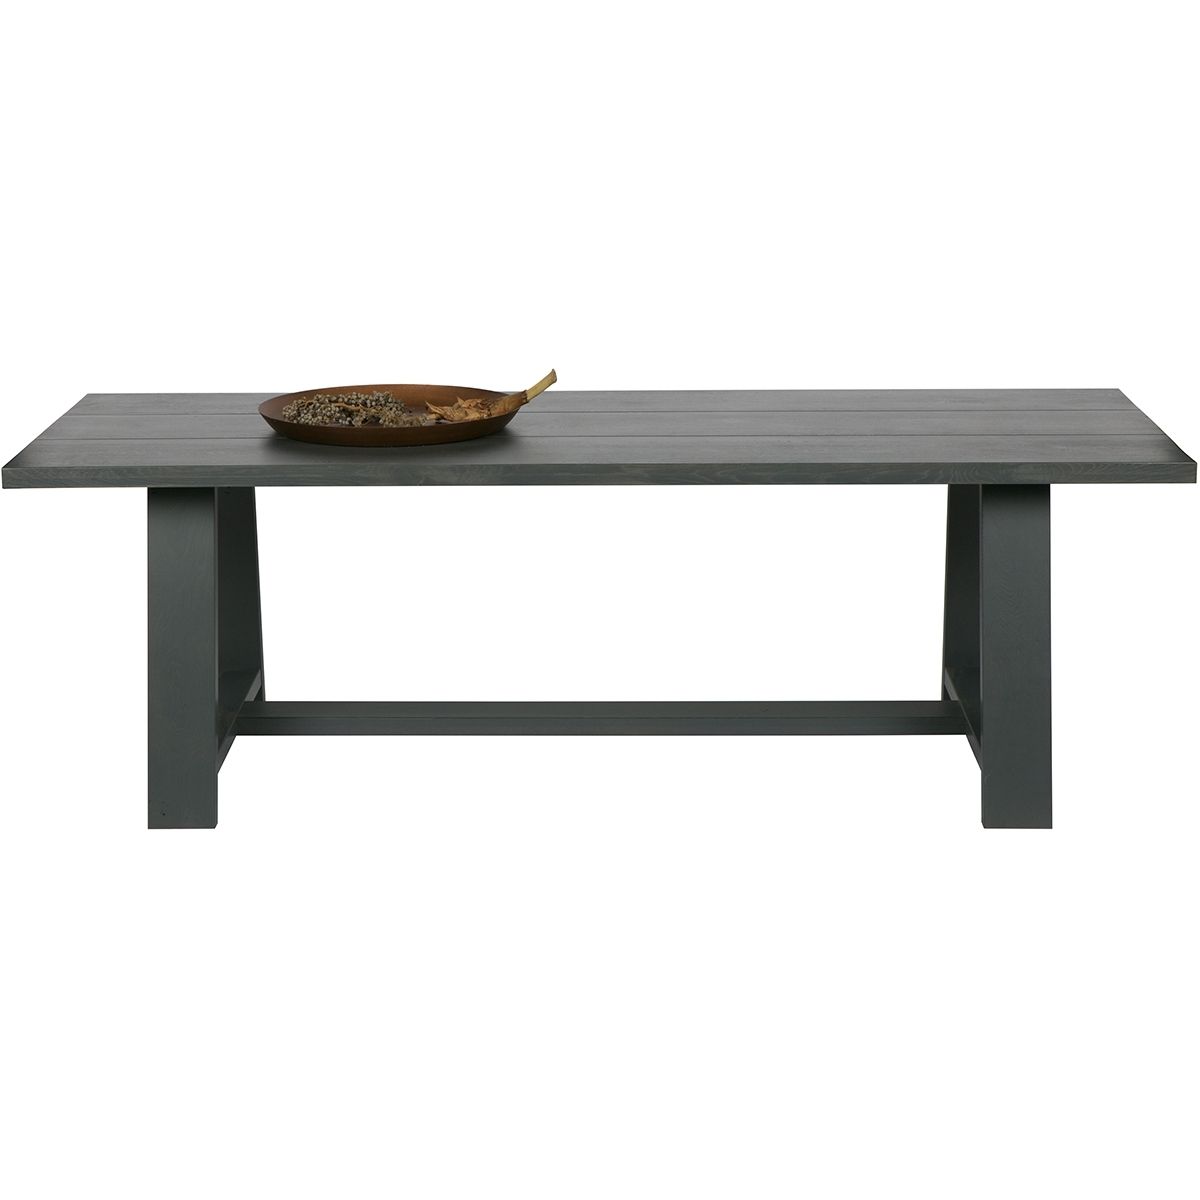 Square Oak Dining Tables Regarding Latest Square Oak Dining Table • Woo .design (Photo 13 of 25)